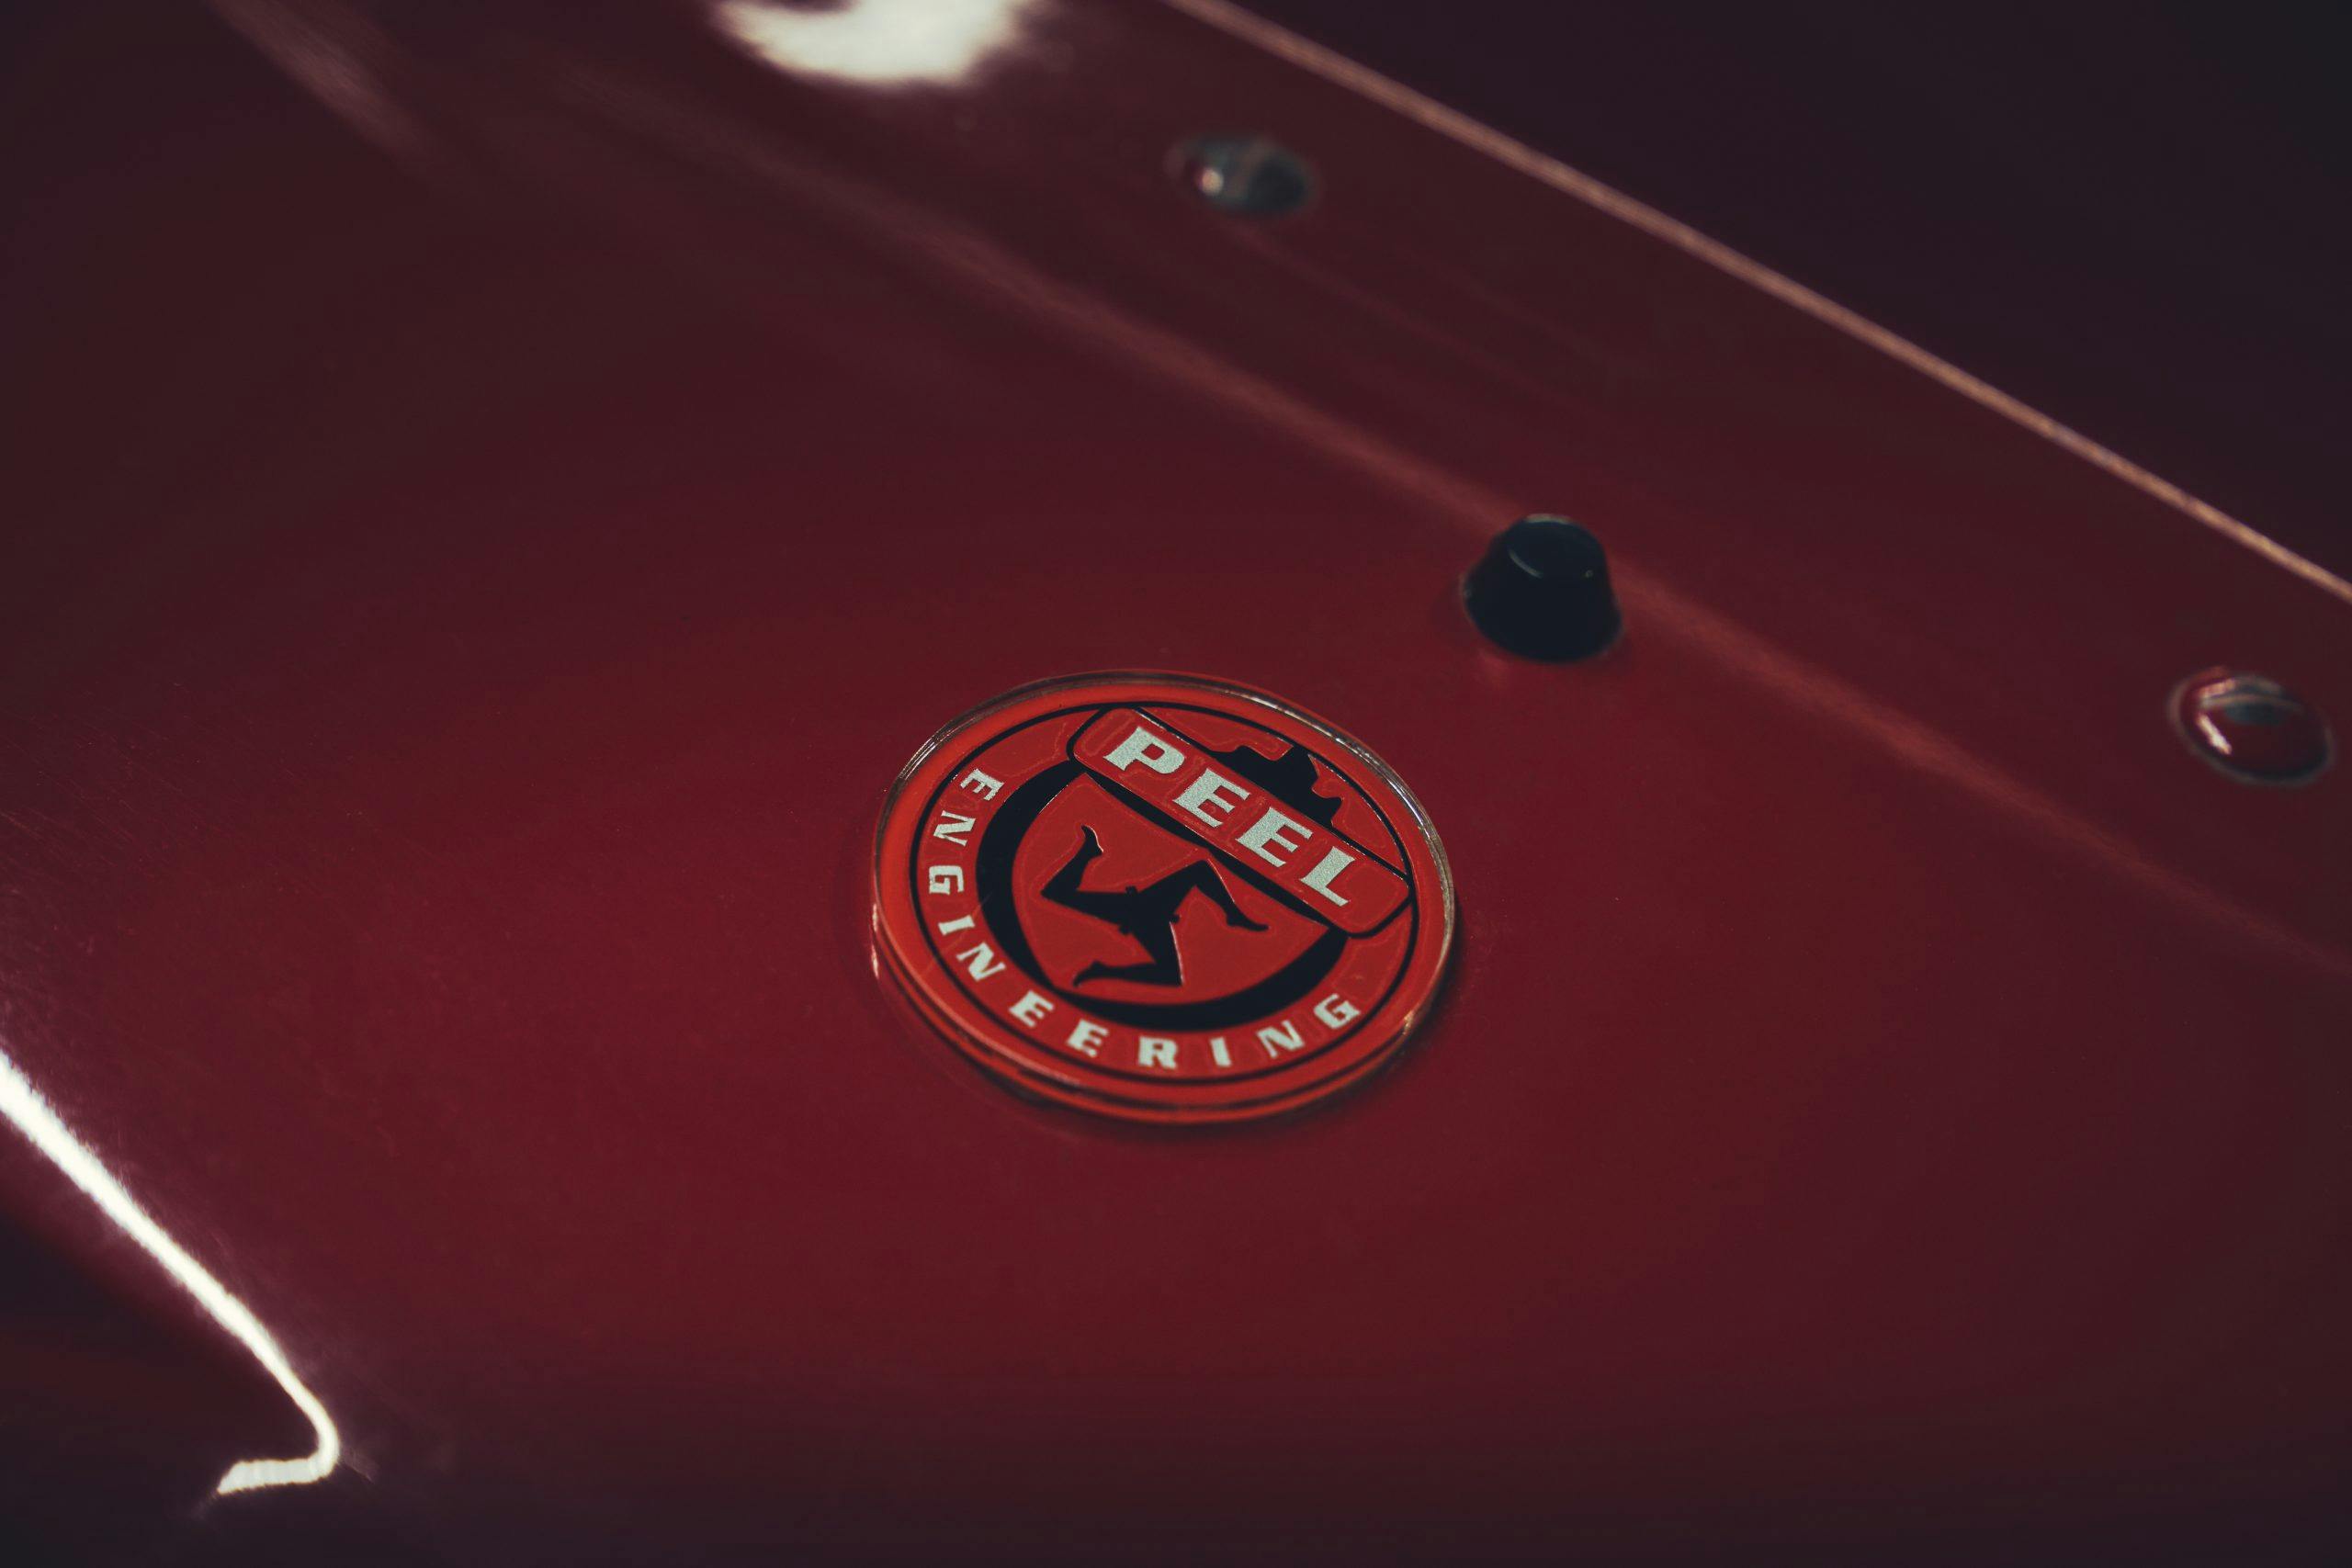 Nashville vintage car museum peel replica badge